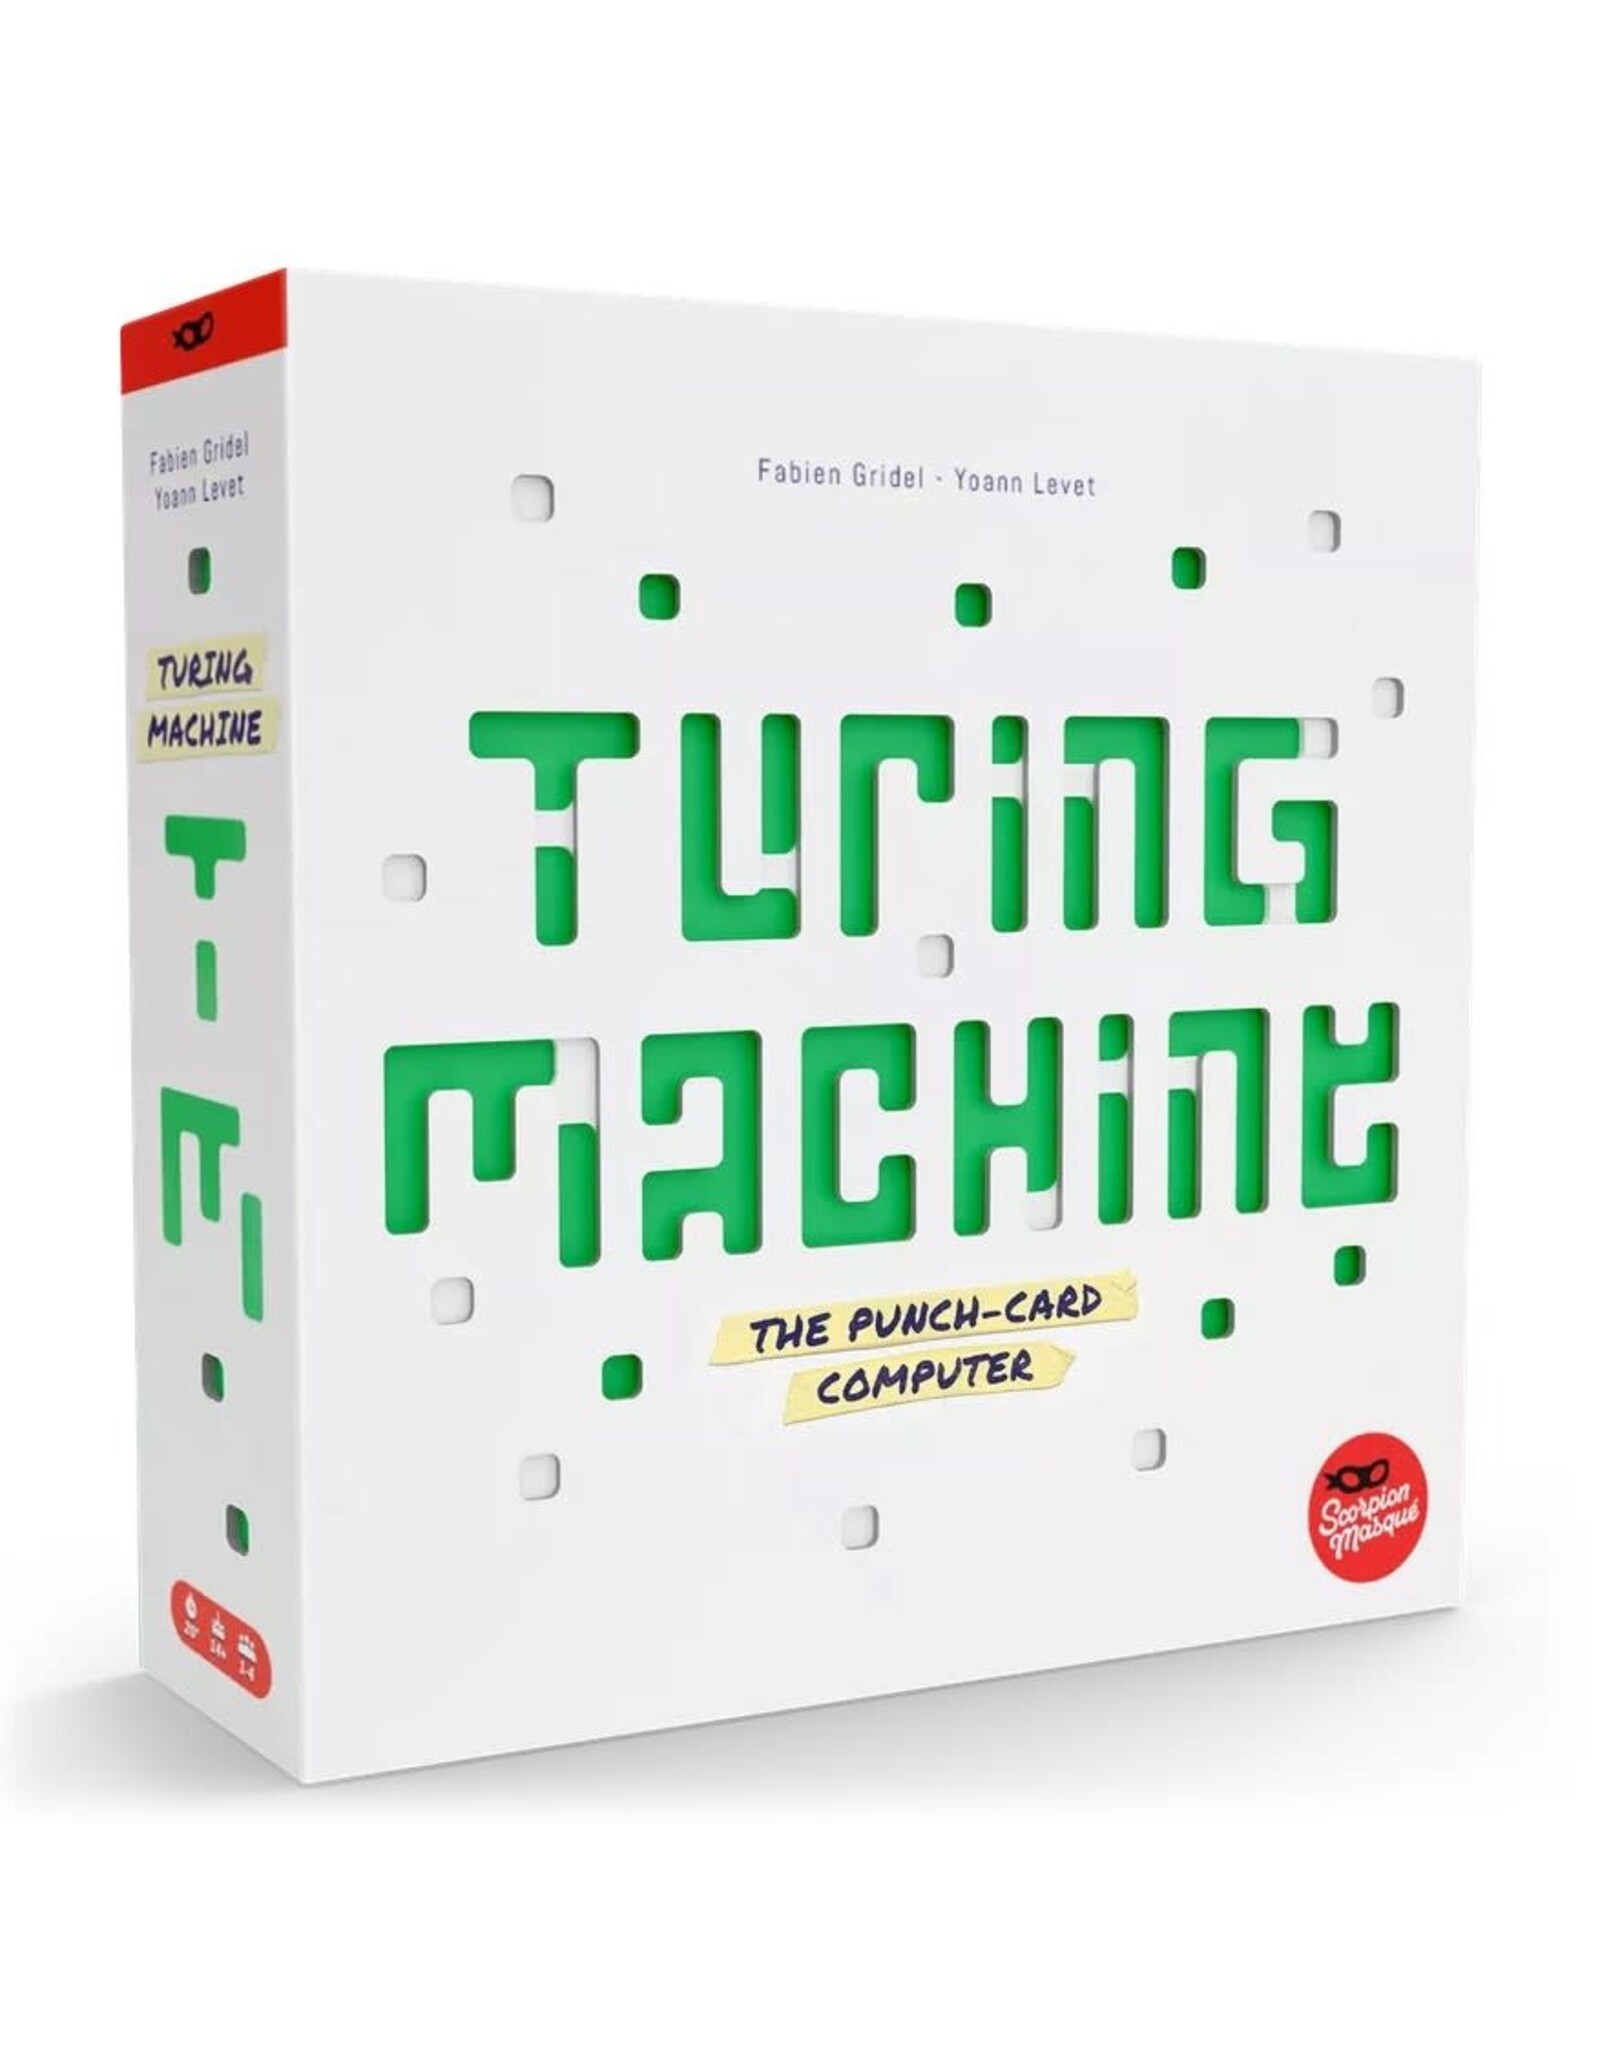 Scorpion Masque Turing Machine